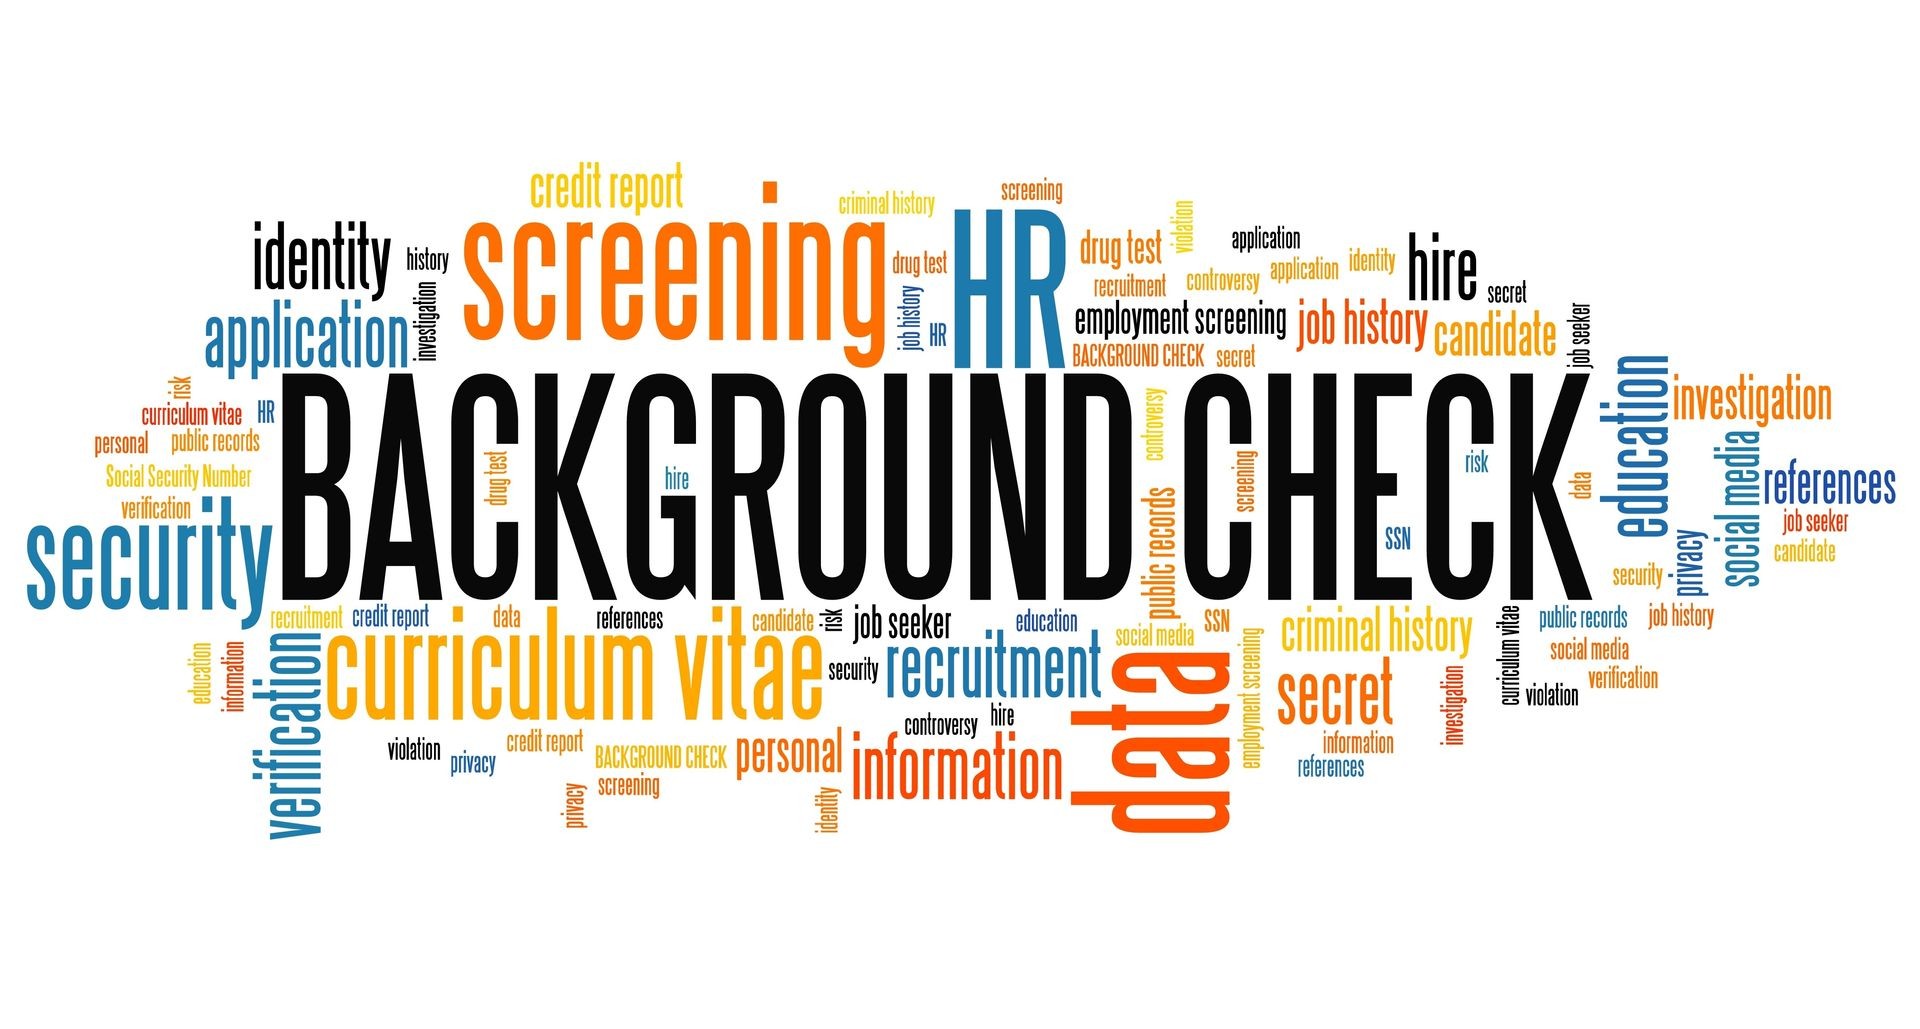 Background check, I-9 Verification, Employment Screening